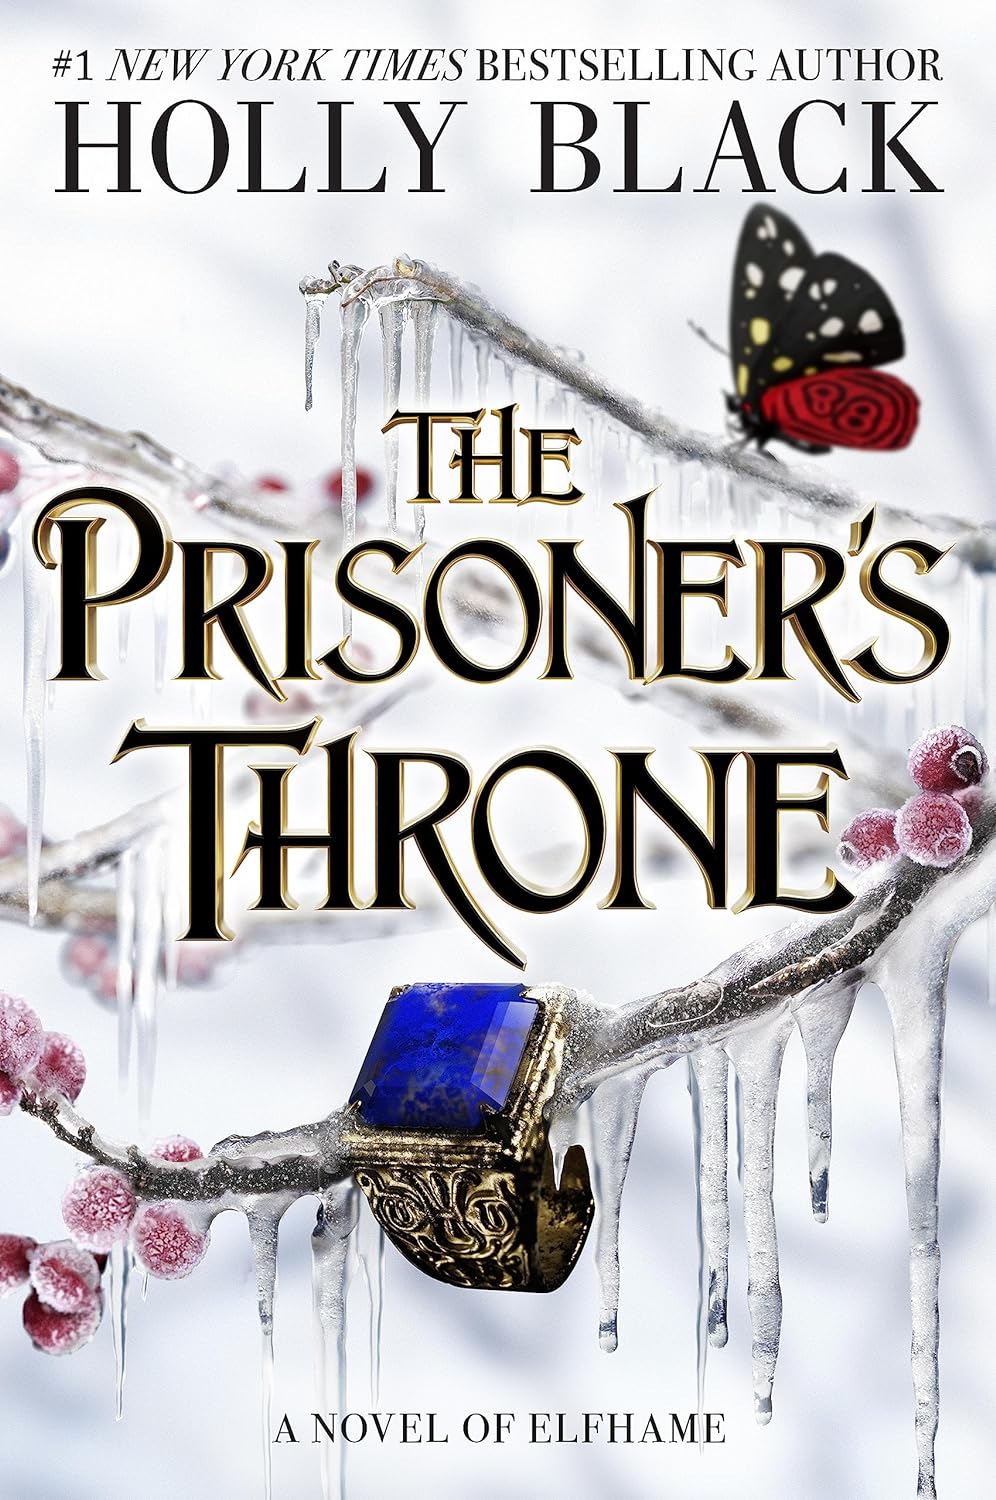 The Prisoner's Throne: A Novel of Elfhame by Holly Black